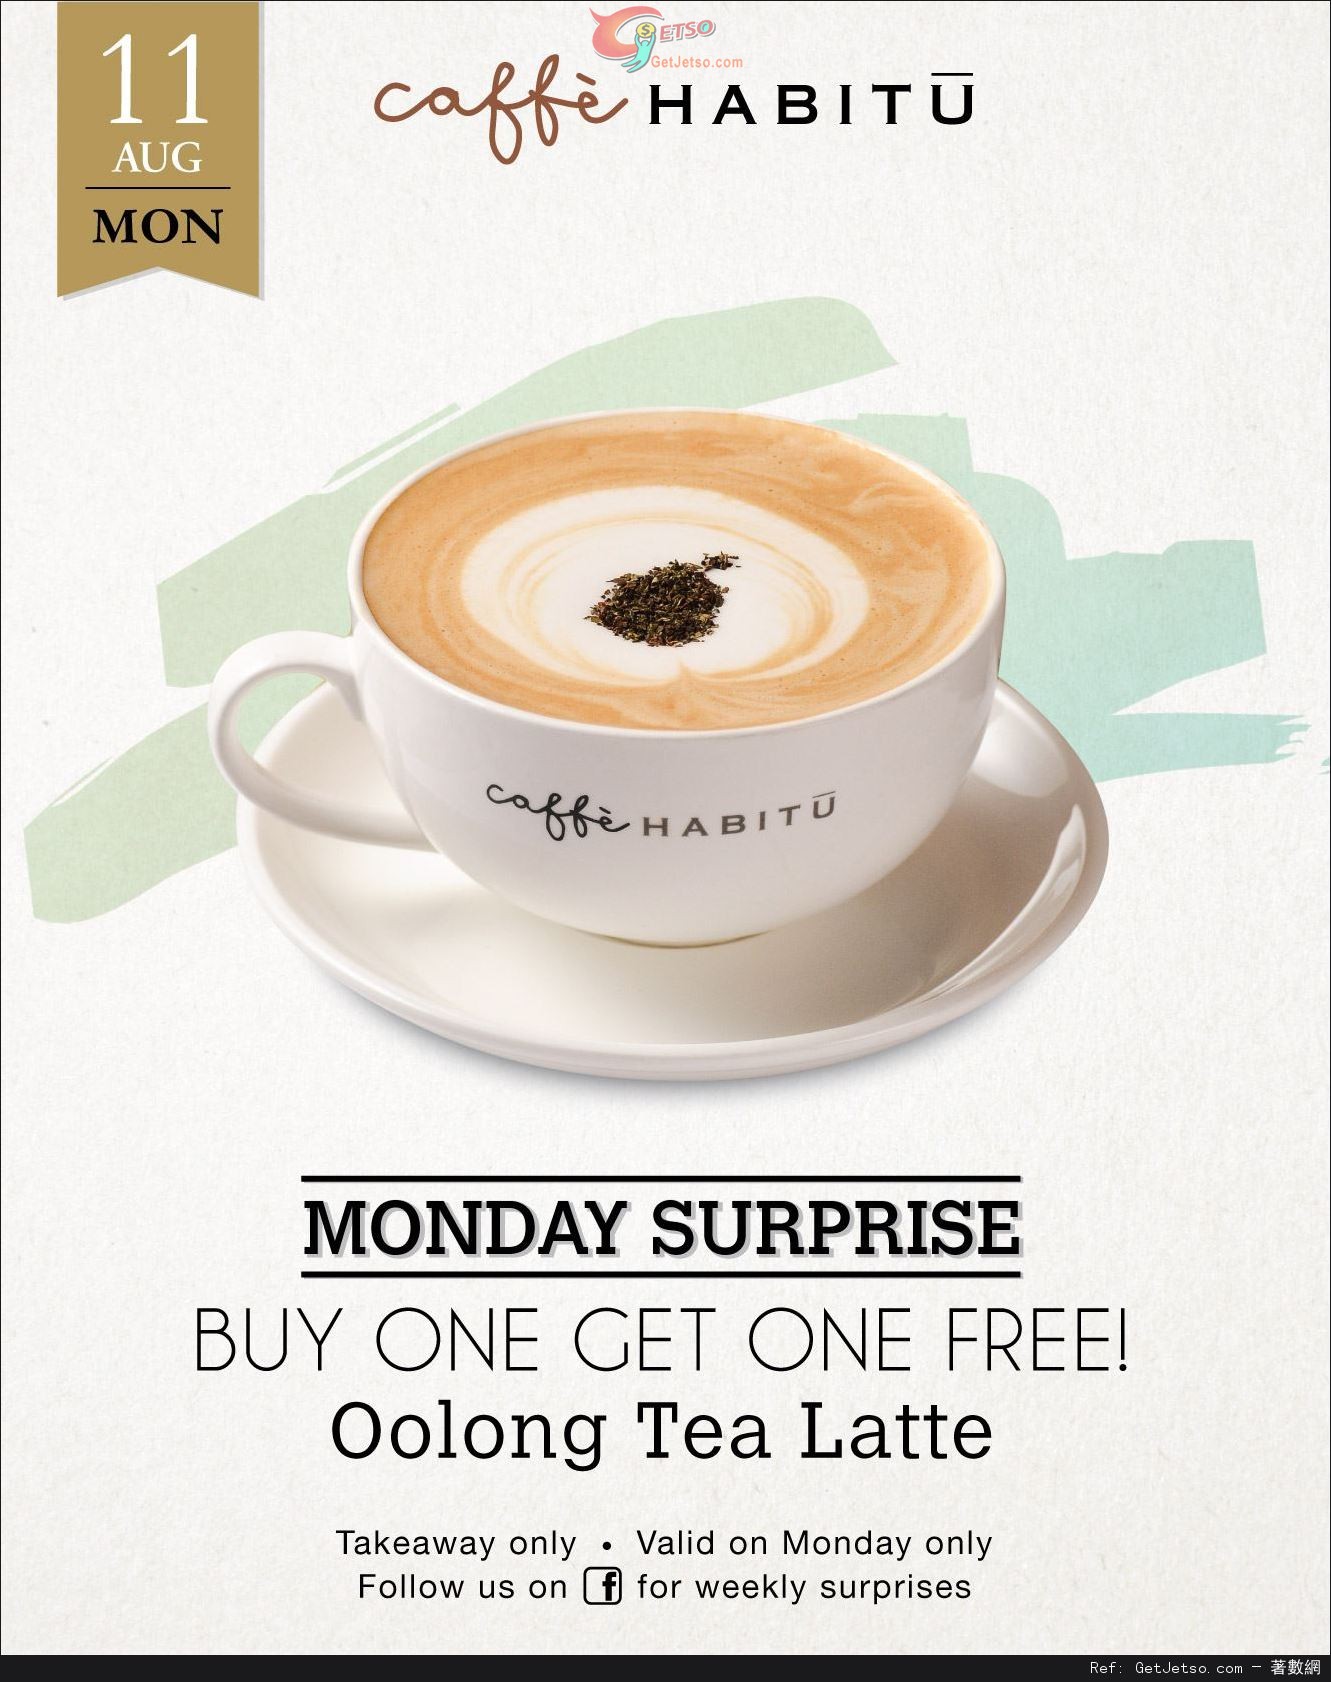 Caffe HABITU Oolong tea latte 買1送1優惠(14年8月11日)圖片1